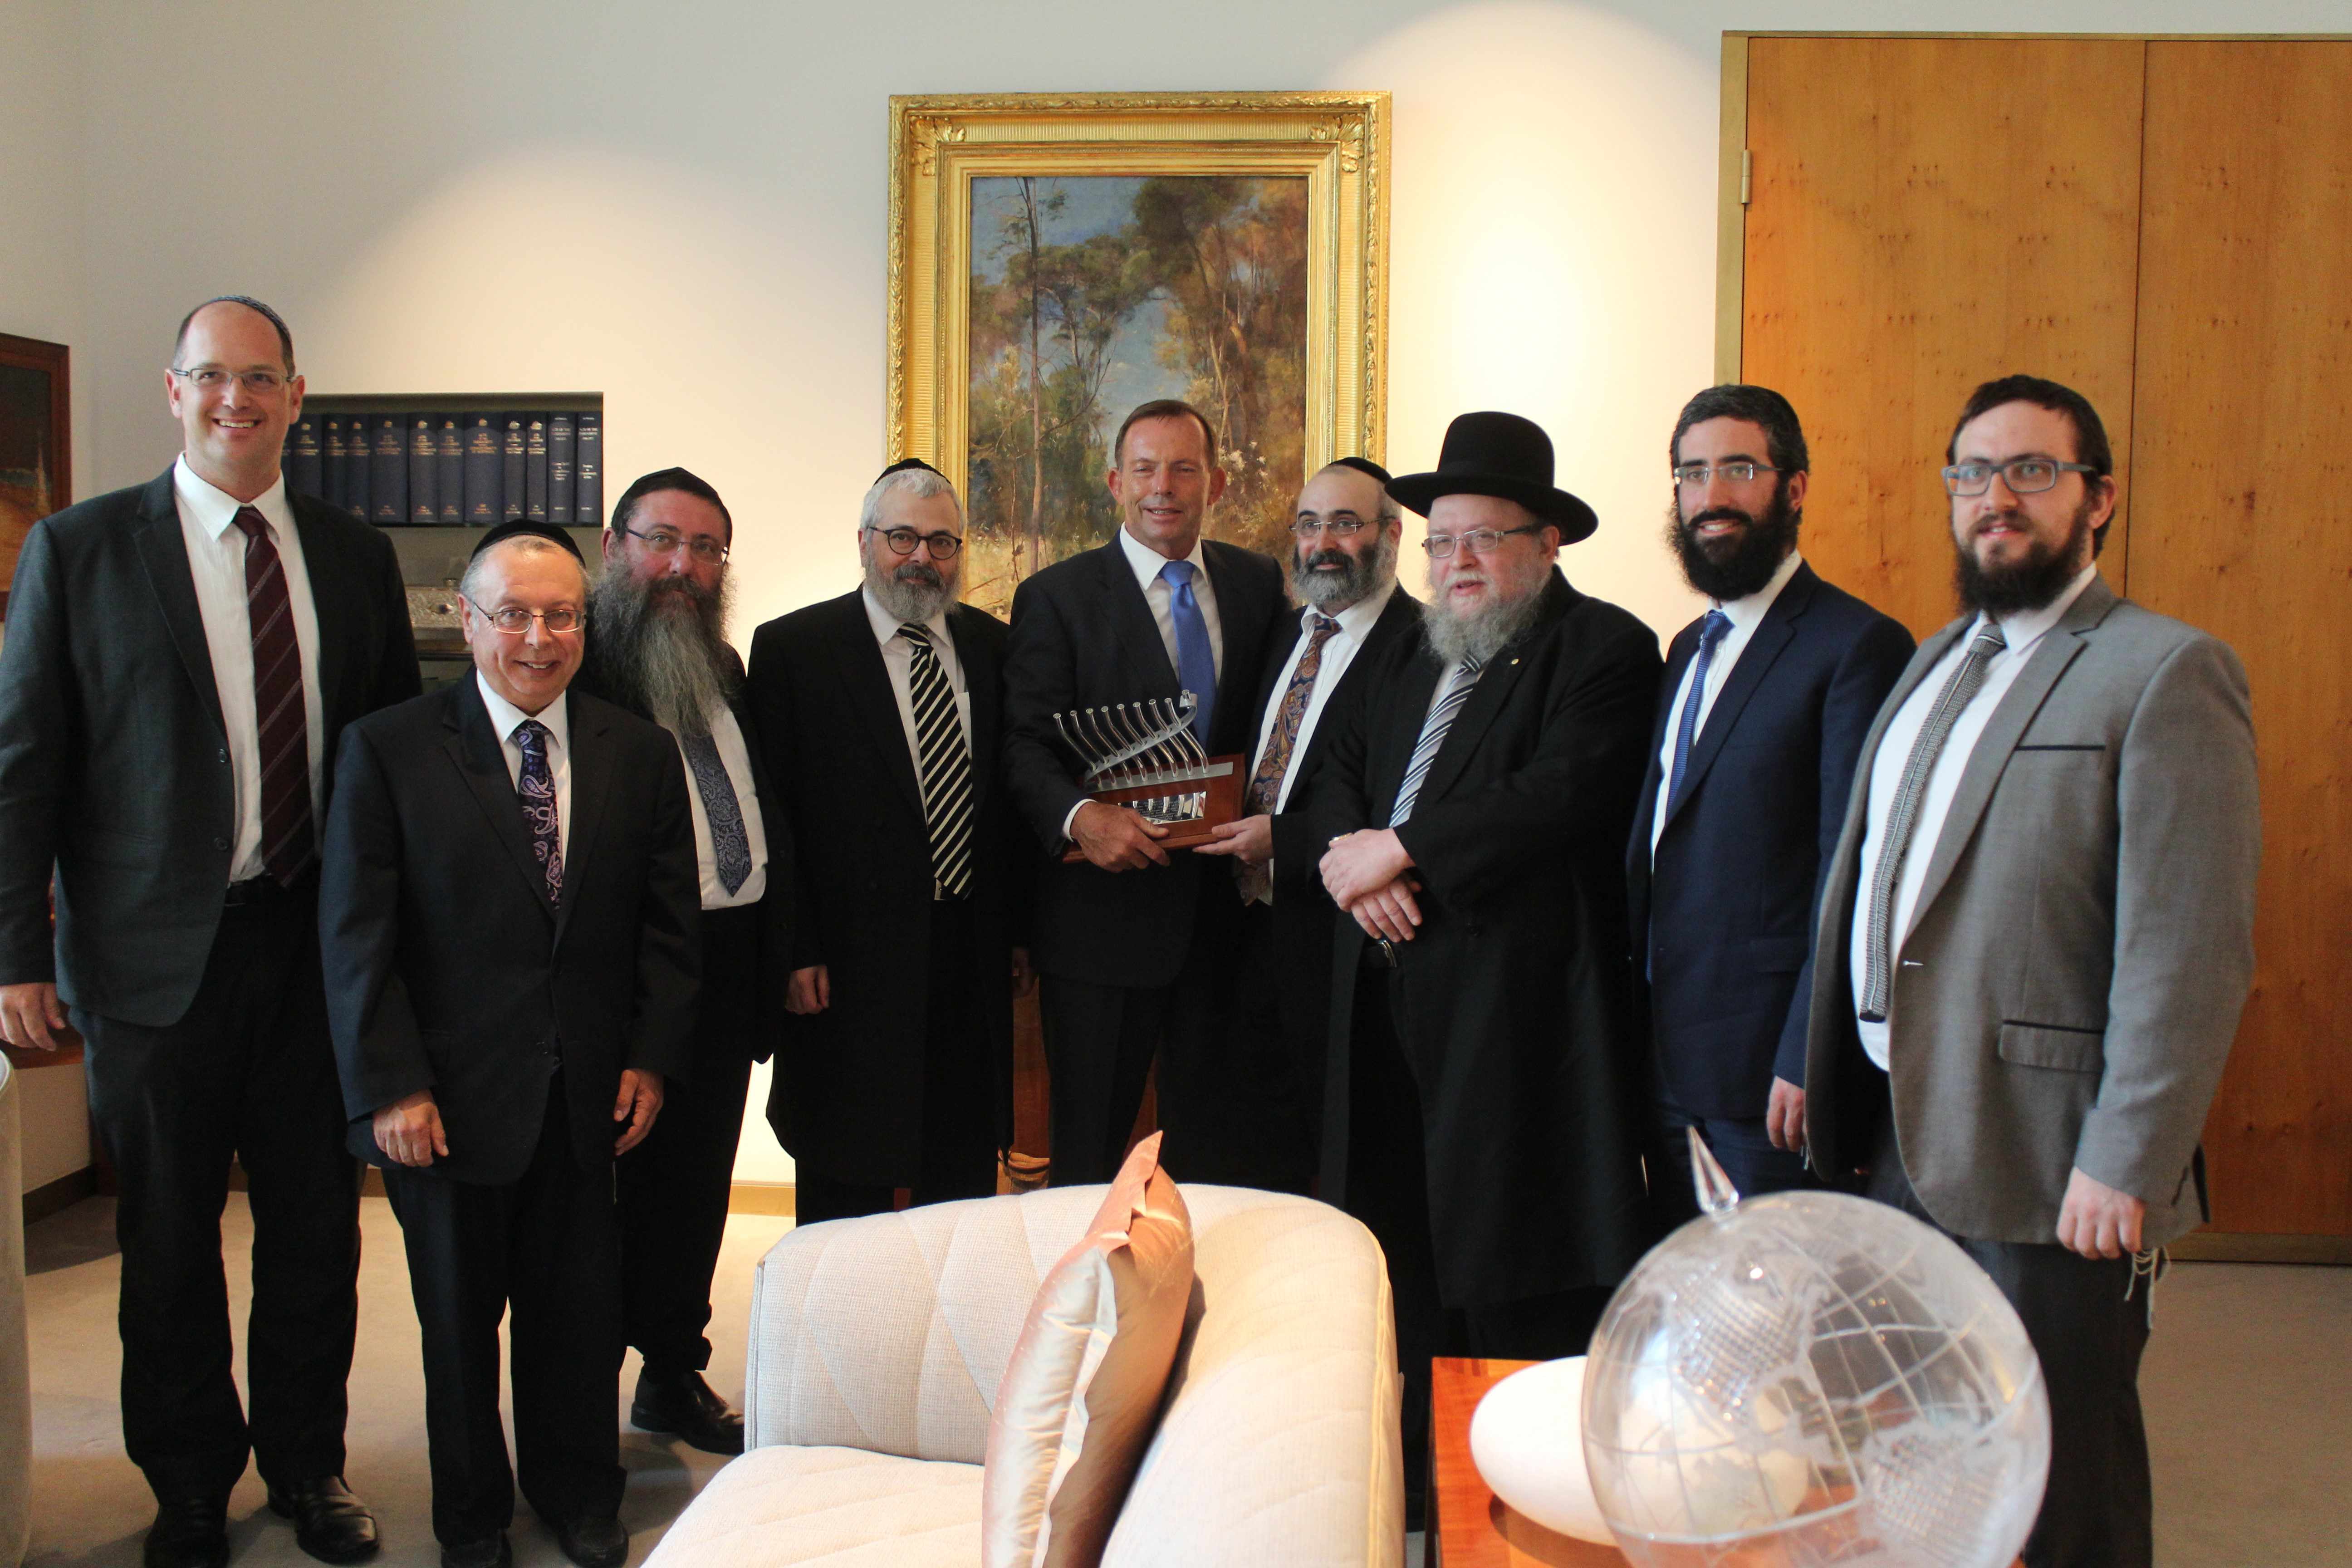 Rabbi's Group Photo with PM copy 2.jpg